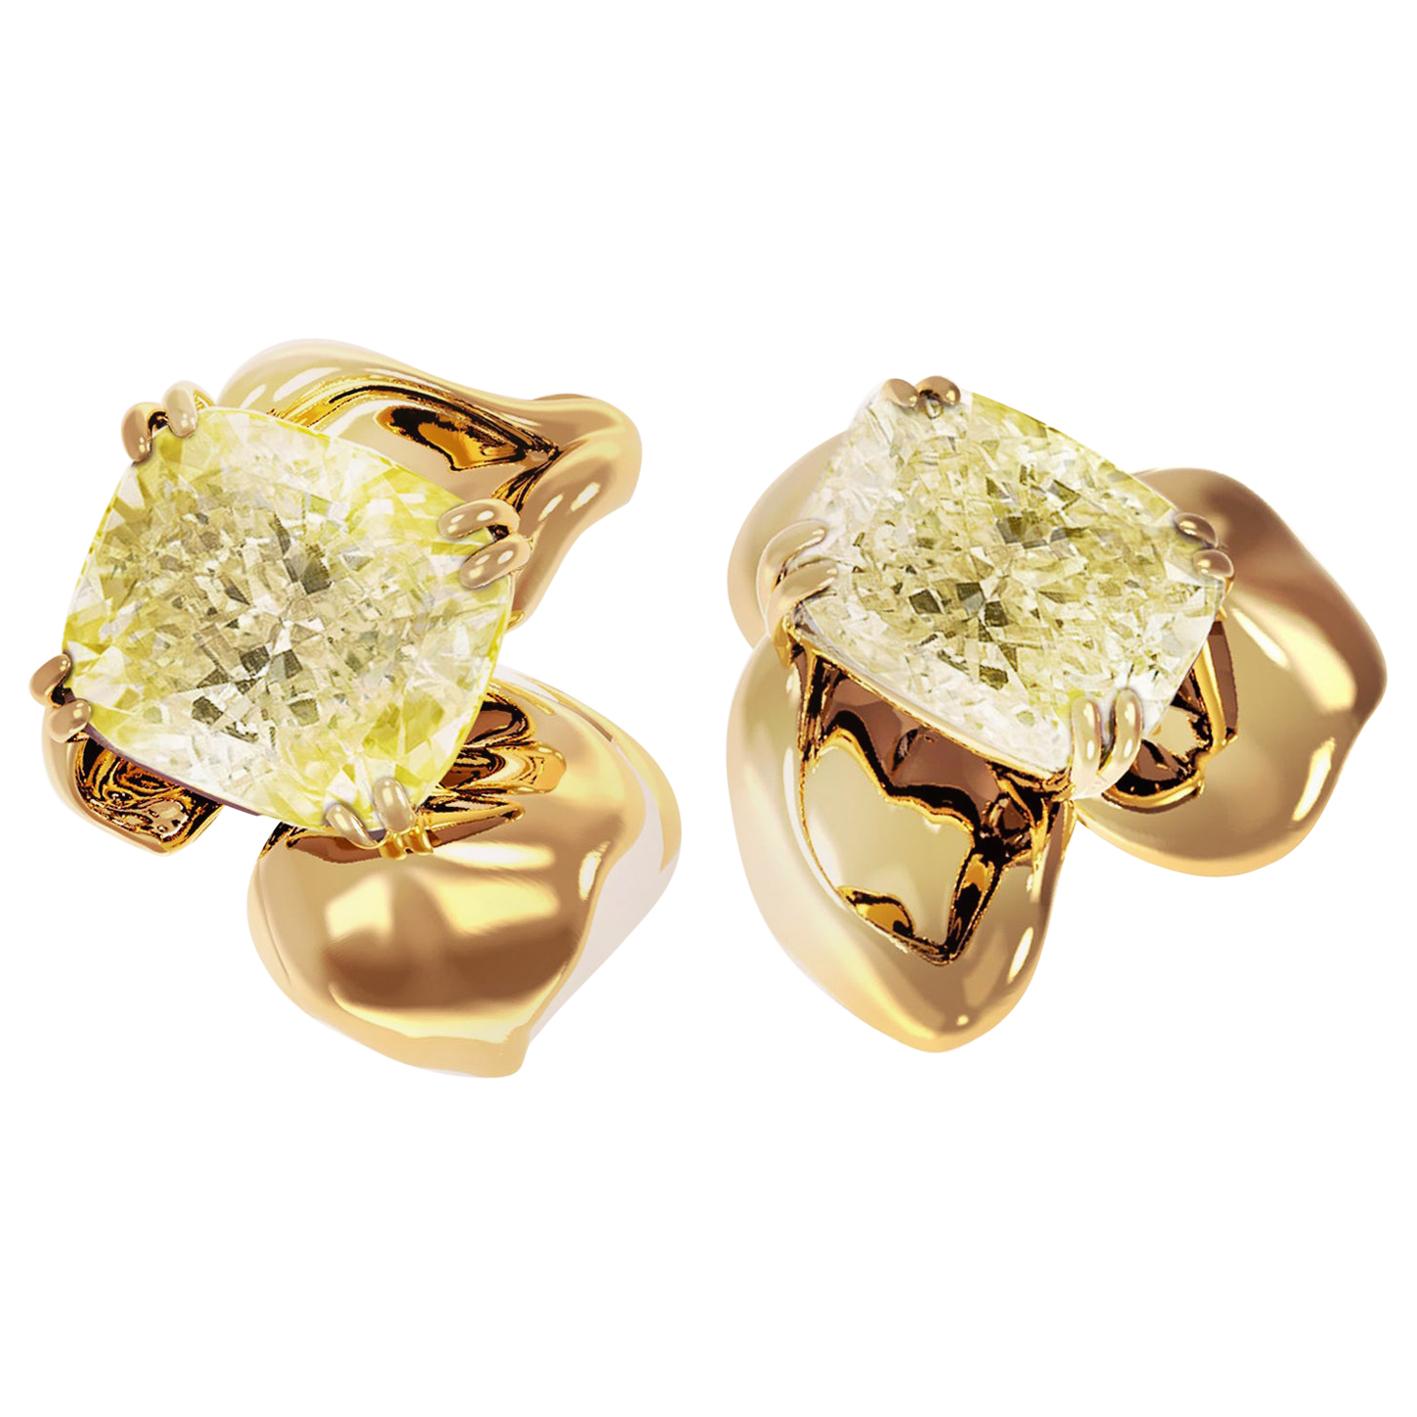 18 Karat Gold Clip-On Earrings with 2 Carat GIA Certified Yellow Diamonds